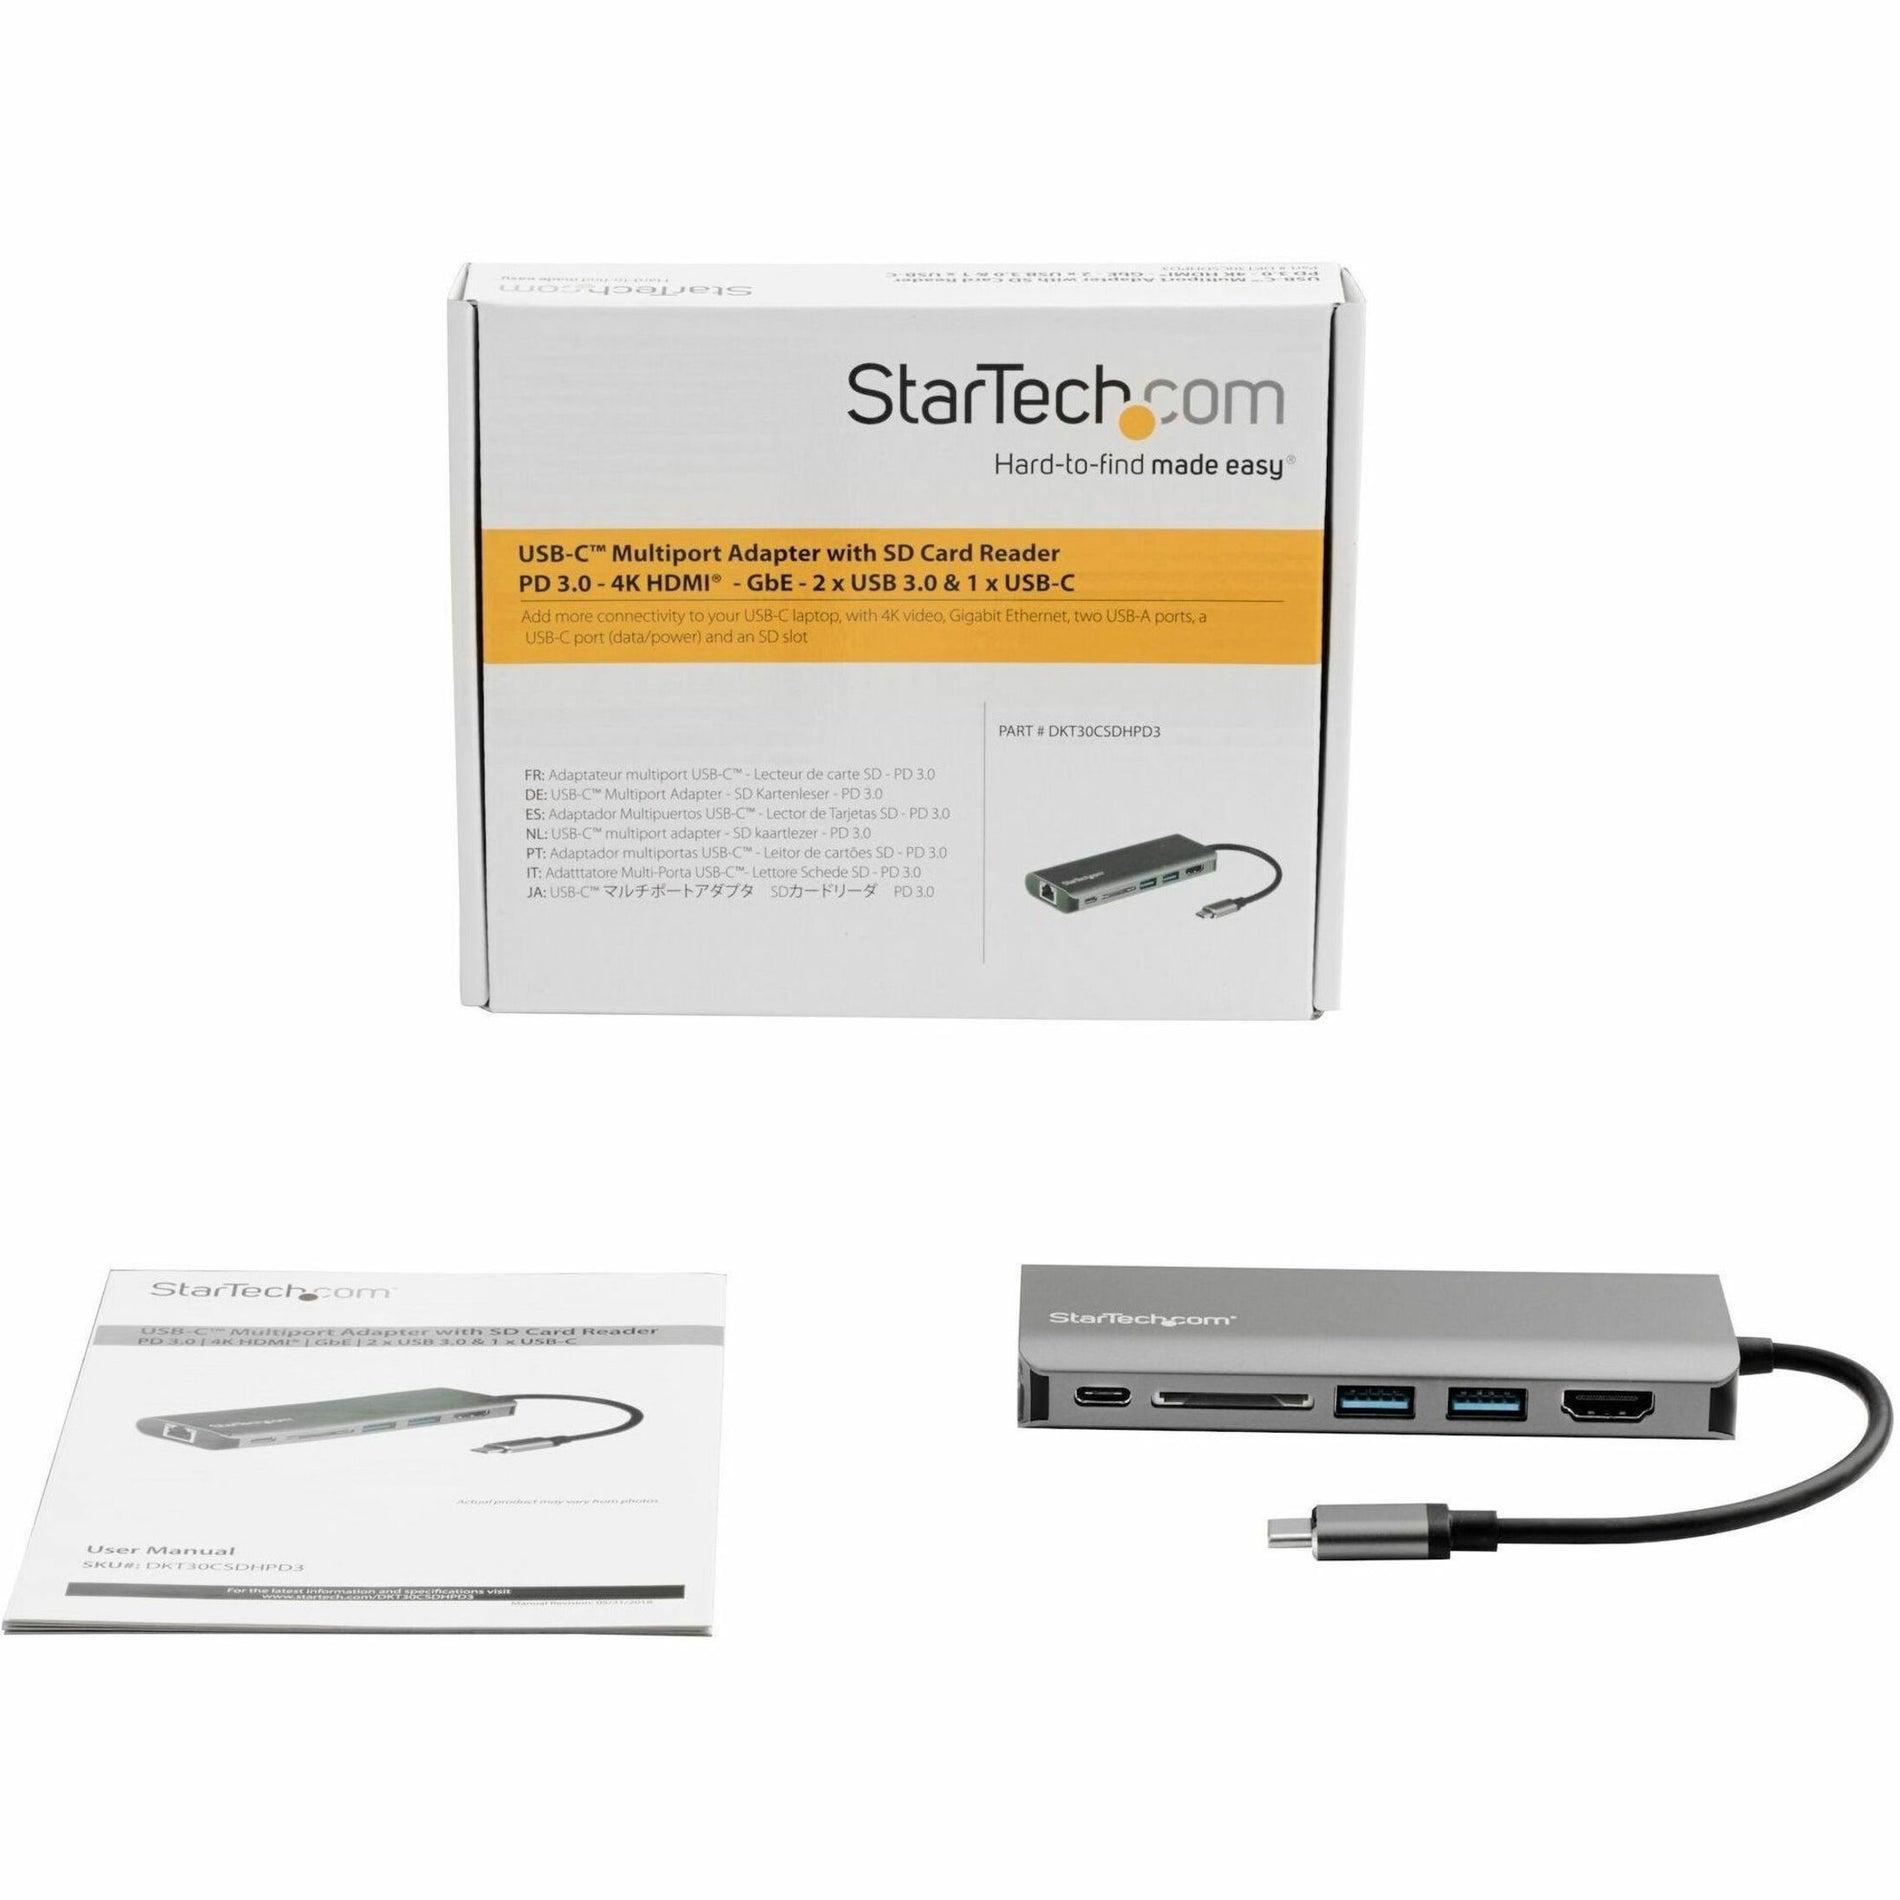 StarTech.com DKT30CSDHPD3 USB-C Multiport Adapter with HDMI - SD Reader - PD 3.0, 4K Display, Gigabit Ethernet